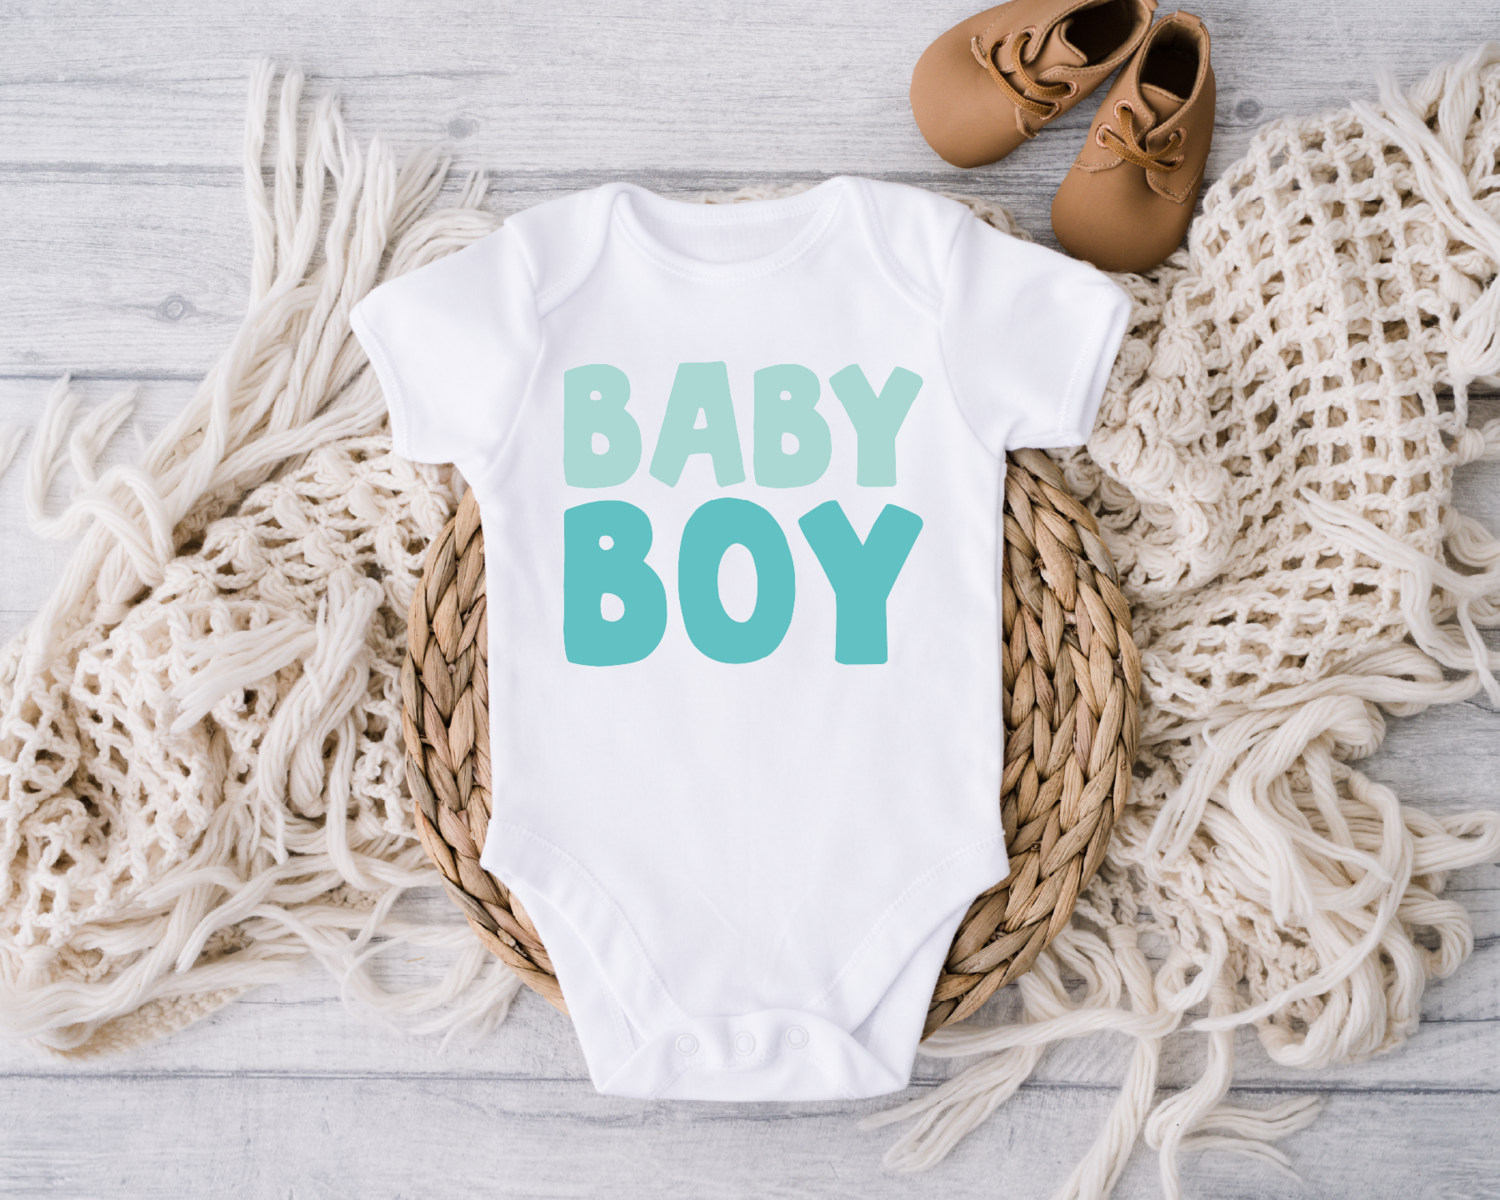 Baby Boy Bodysuits, Baby Shower Gift